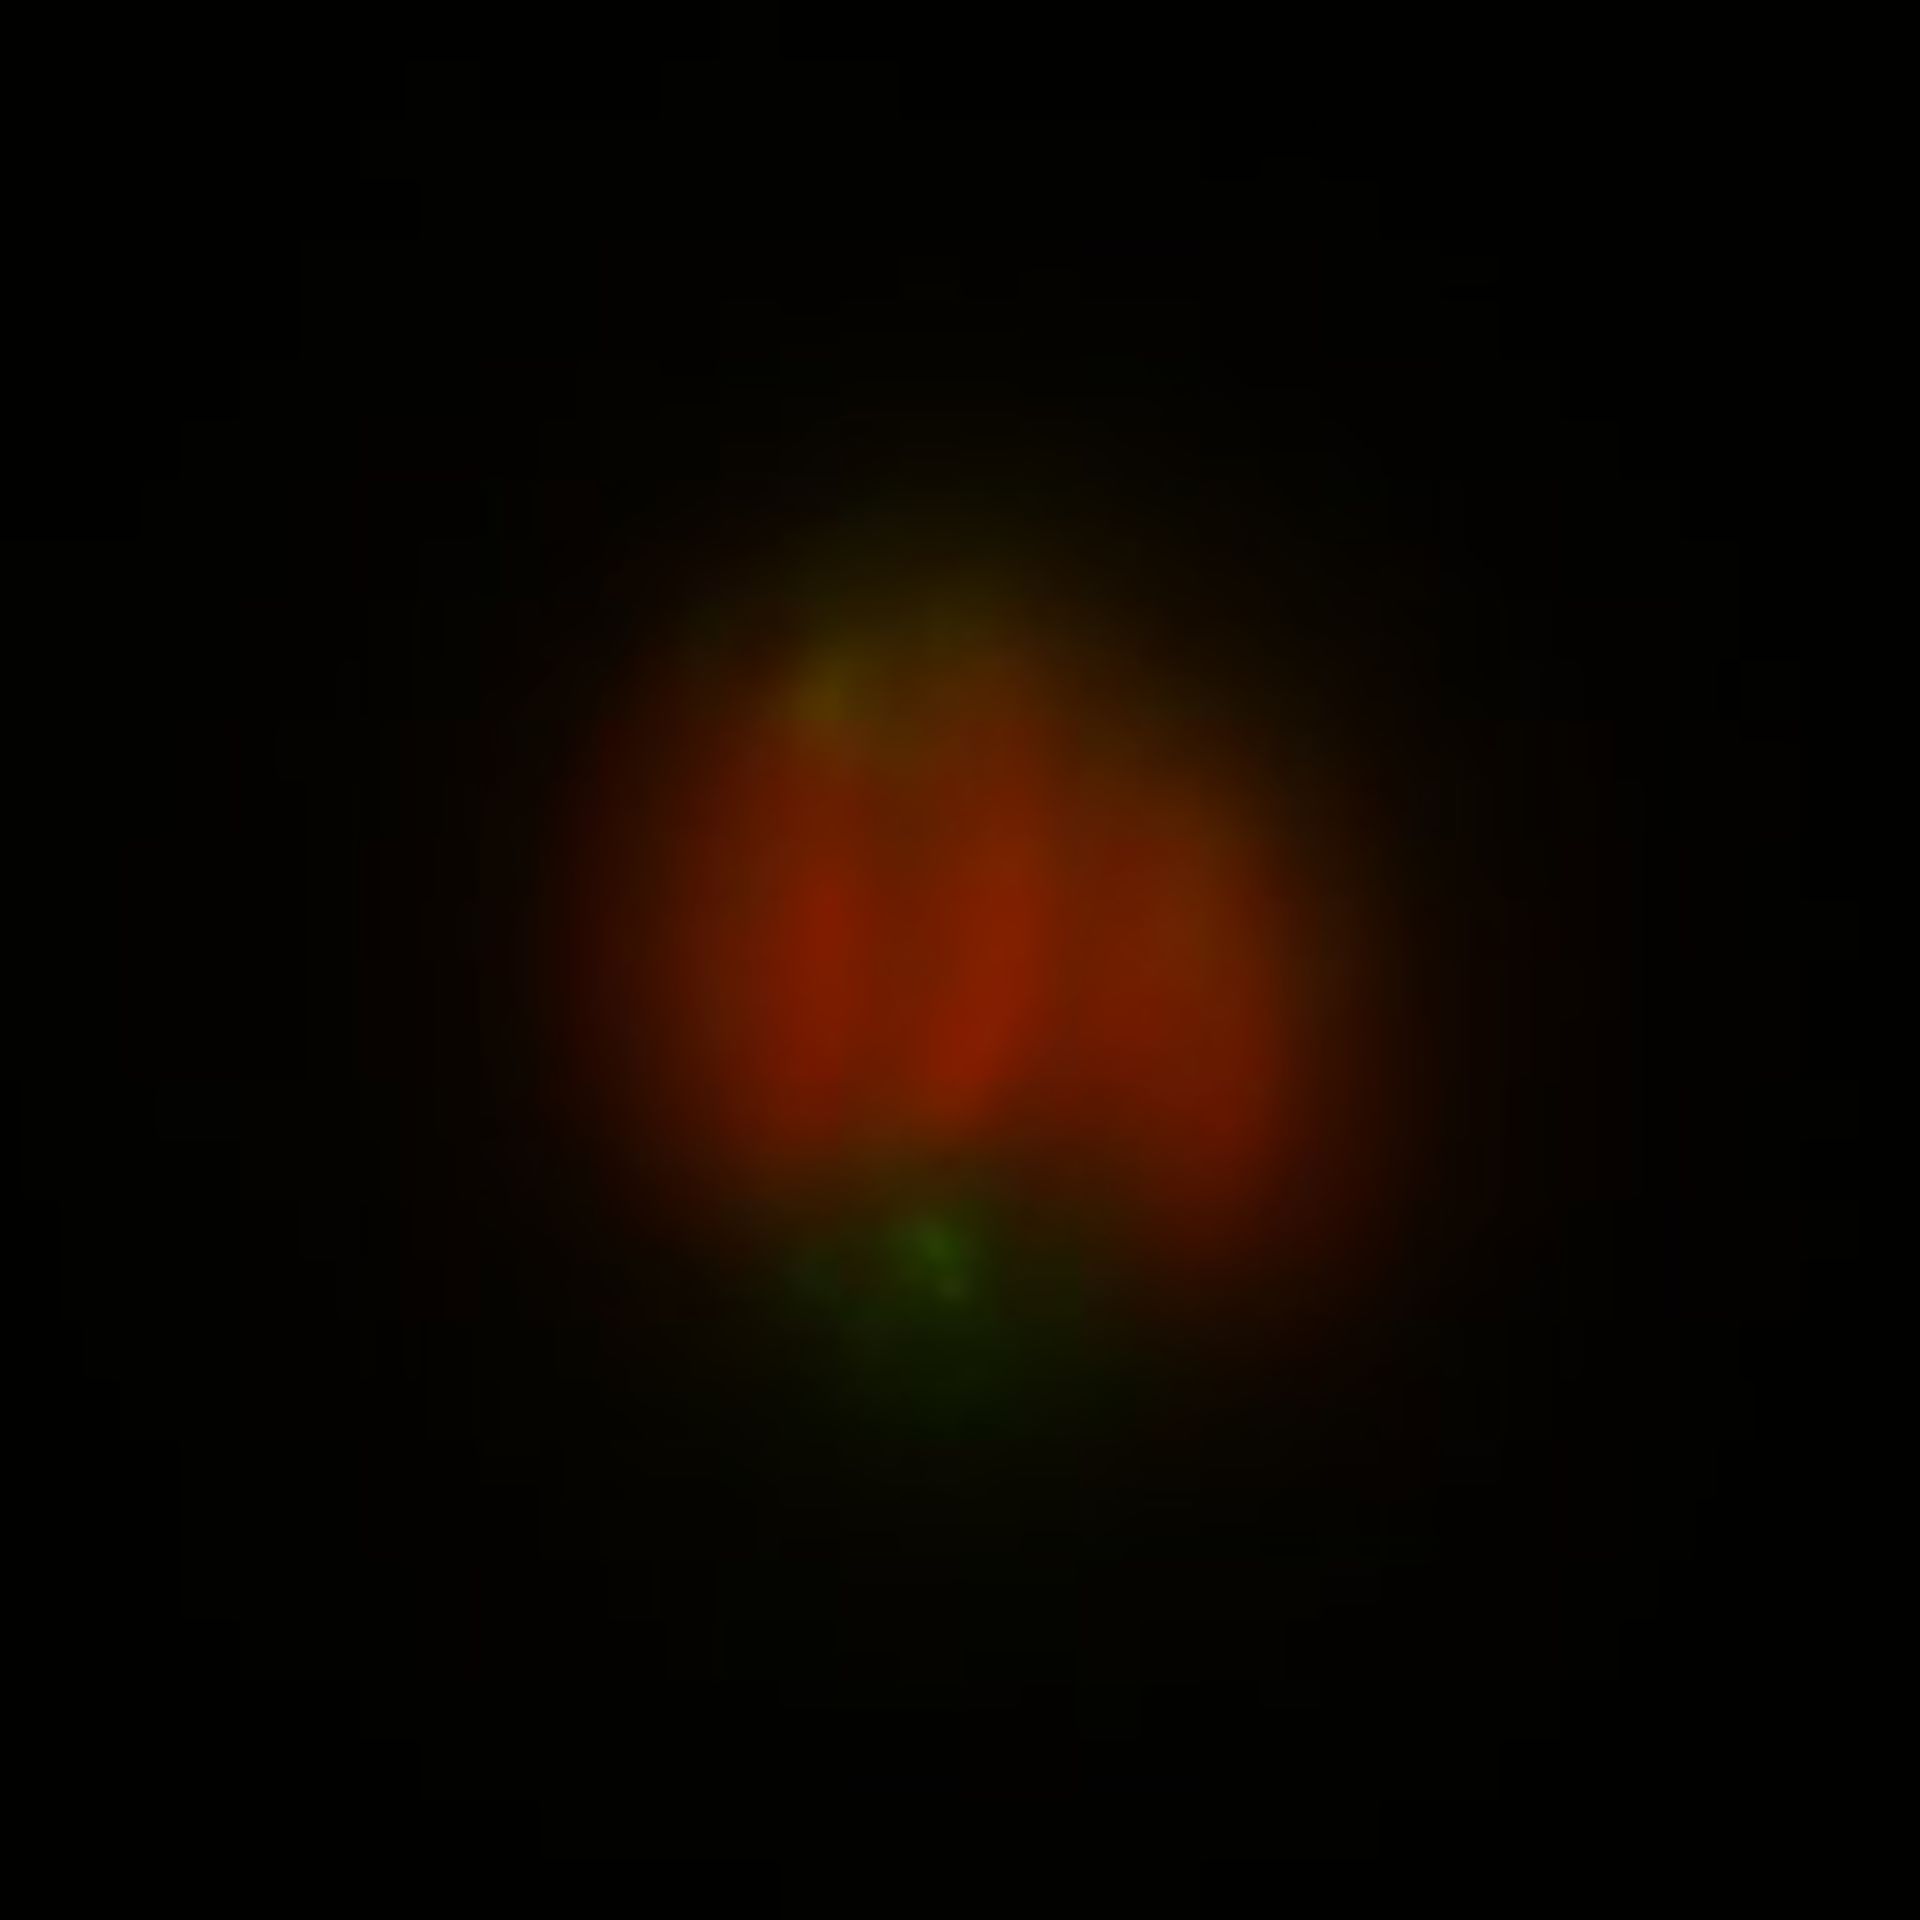 Toxoplasma gondii RH (Polar ring of apical complex) - CIL:10495